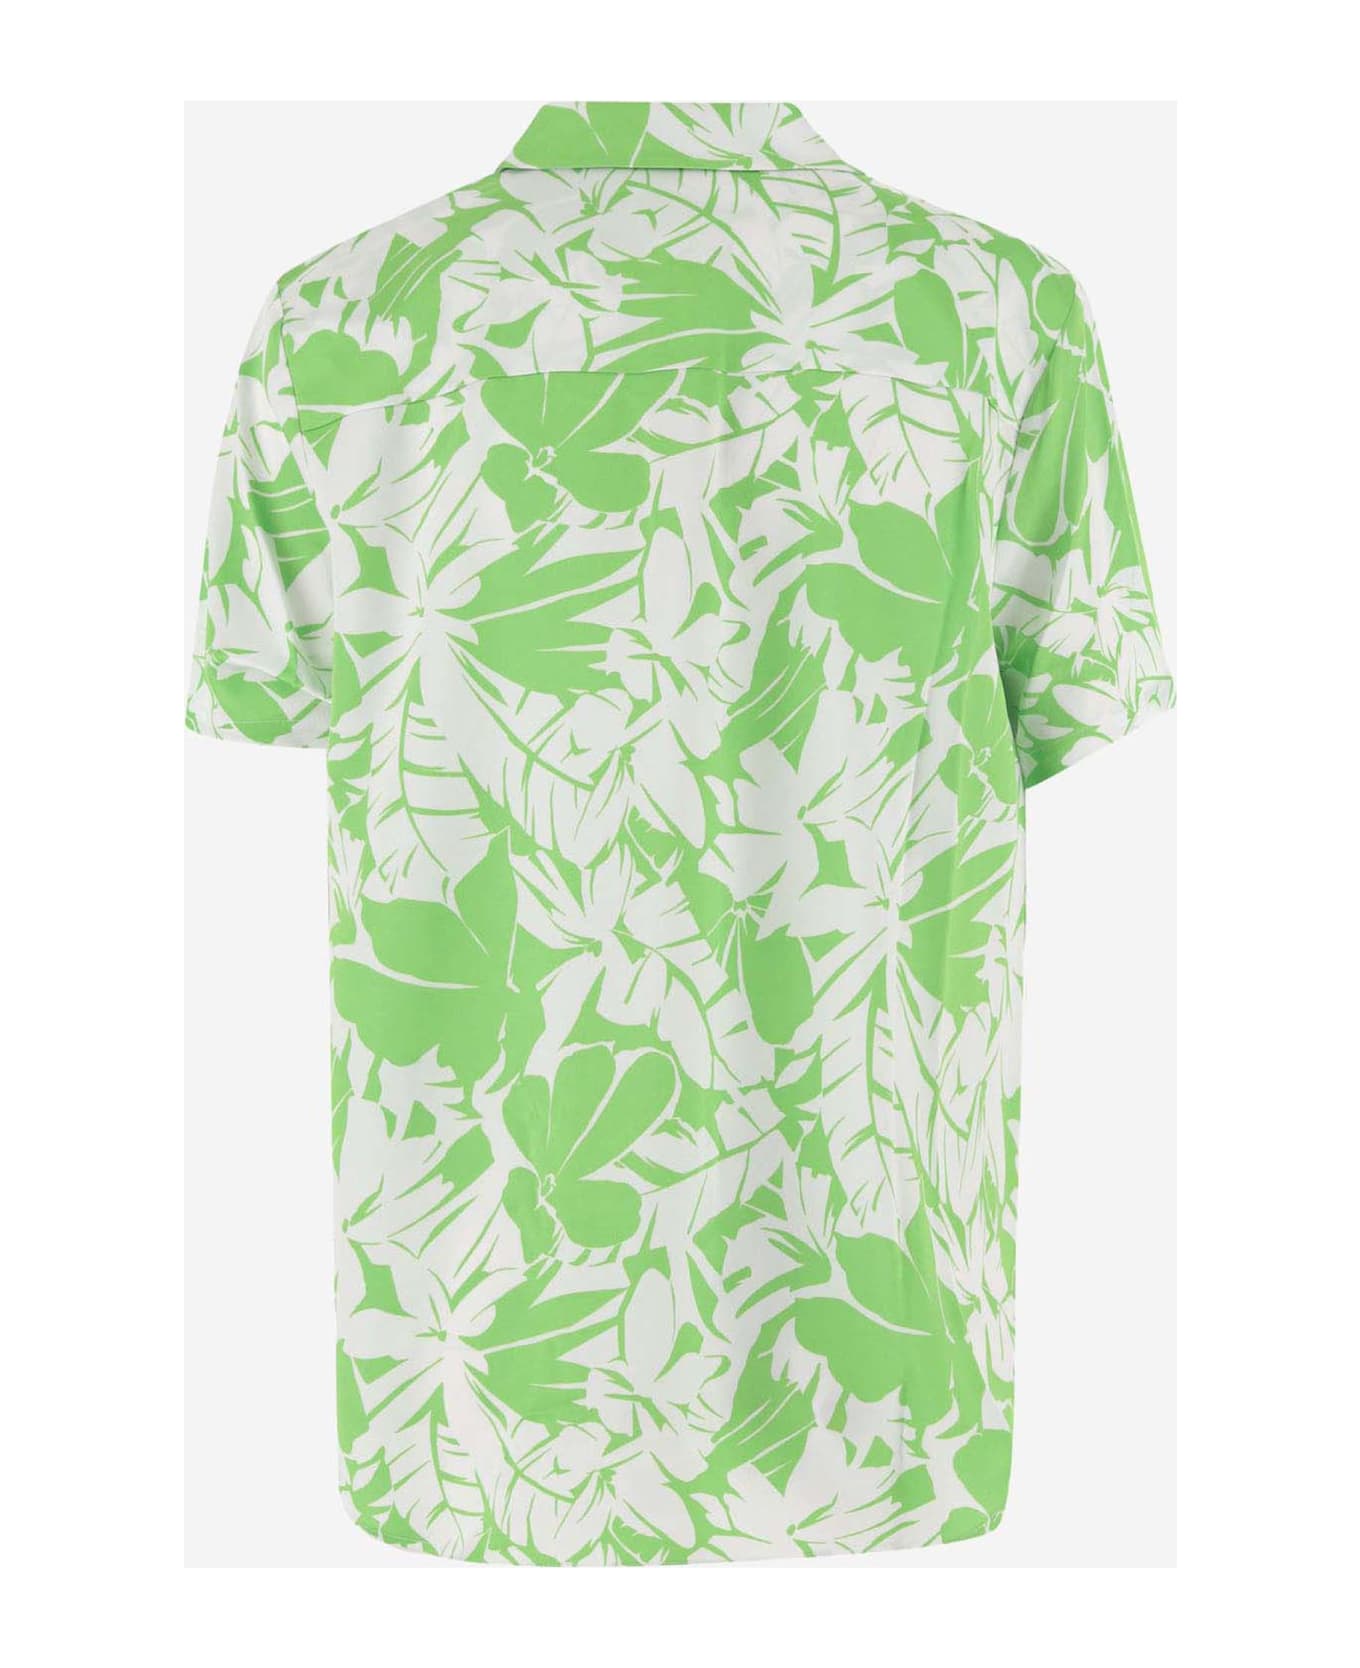 Michael Kors Nylon Shirt With Floral Pattern Michael Kors - Green